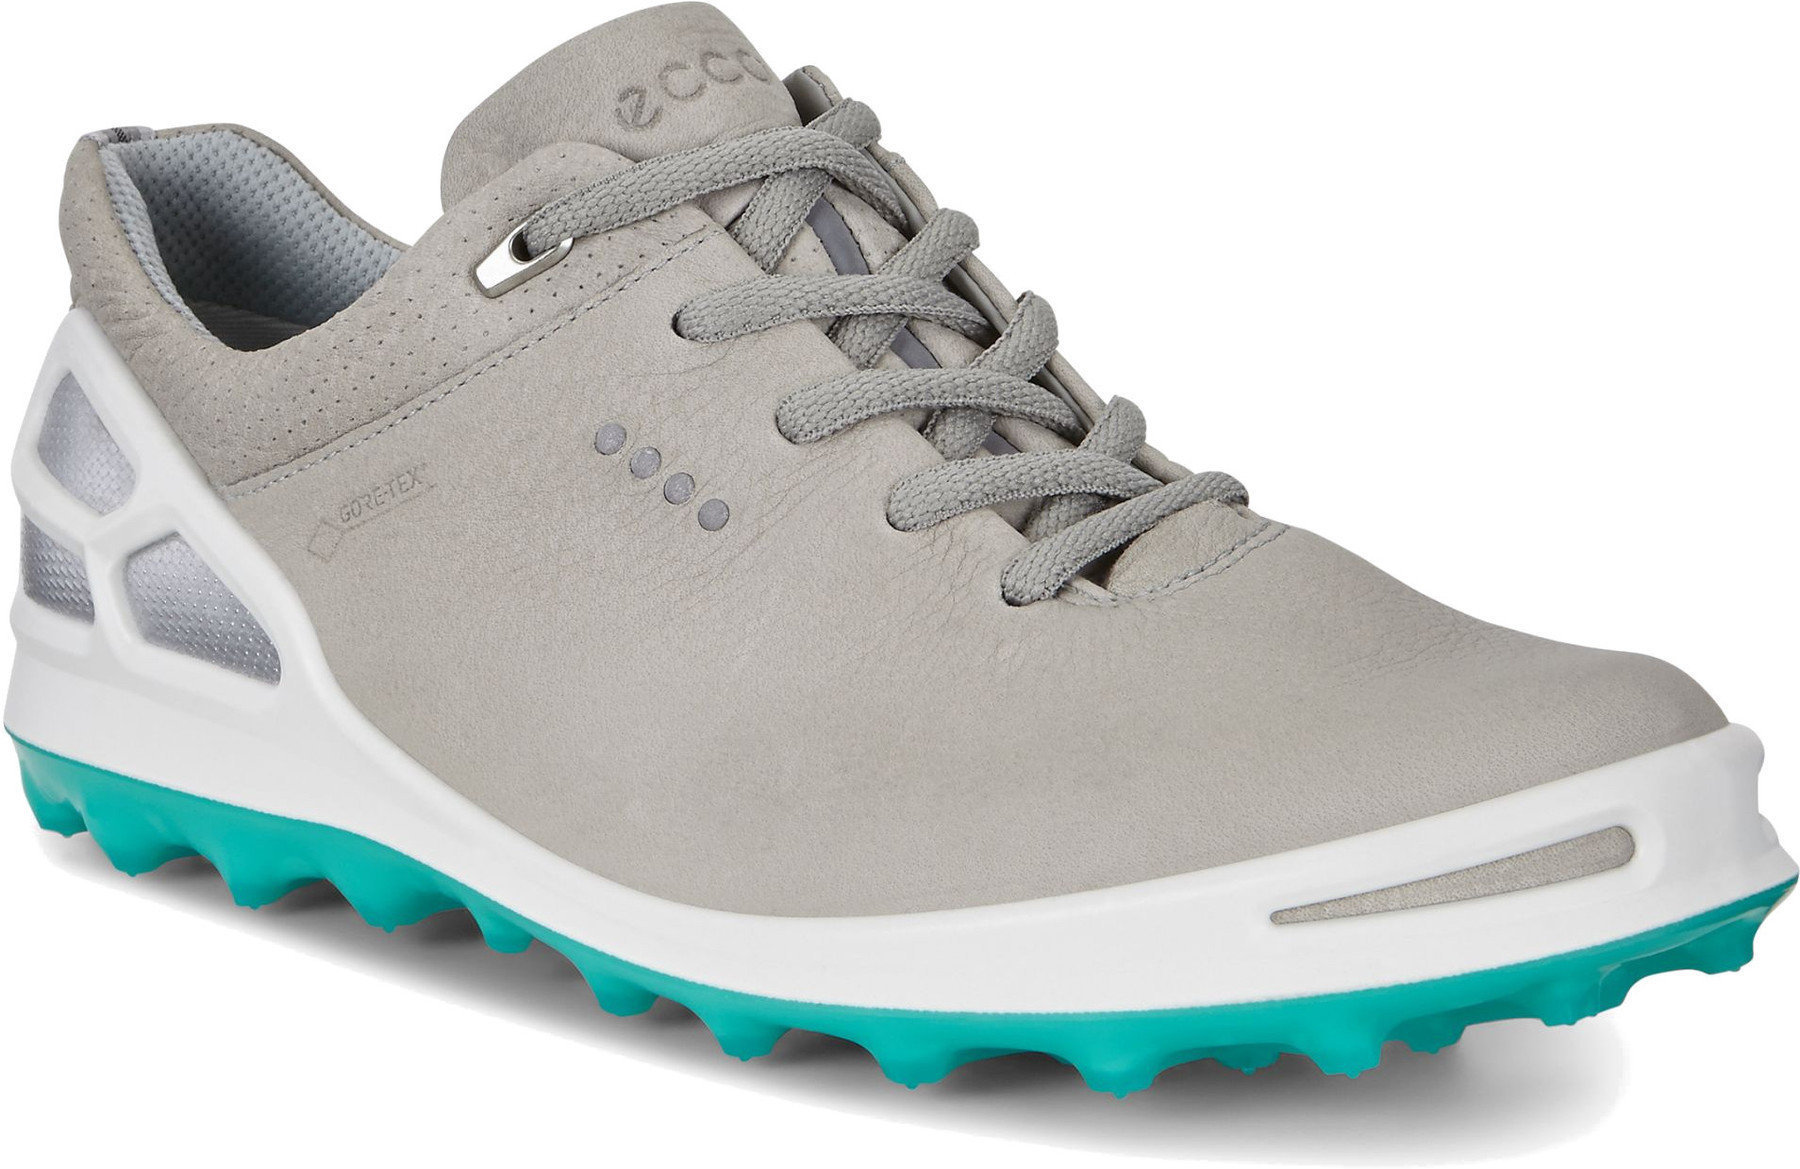 Chaussures de golf pour femmes Ecco Biom Cage Pro Chaussures de Golf Femmes Wild Dove/Porcelain Green 38